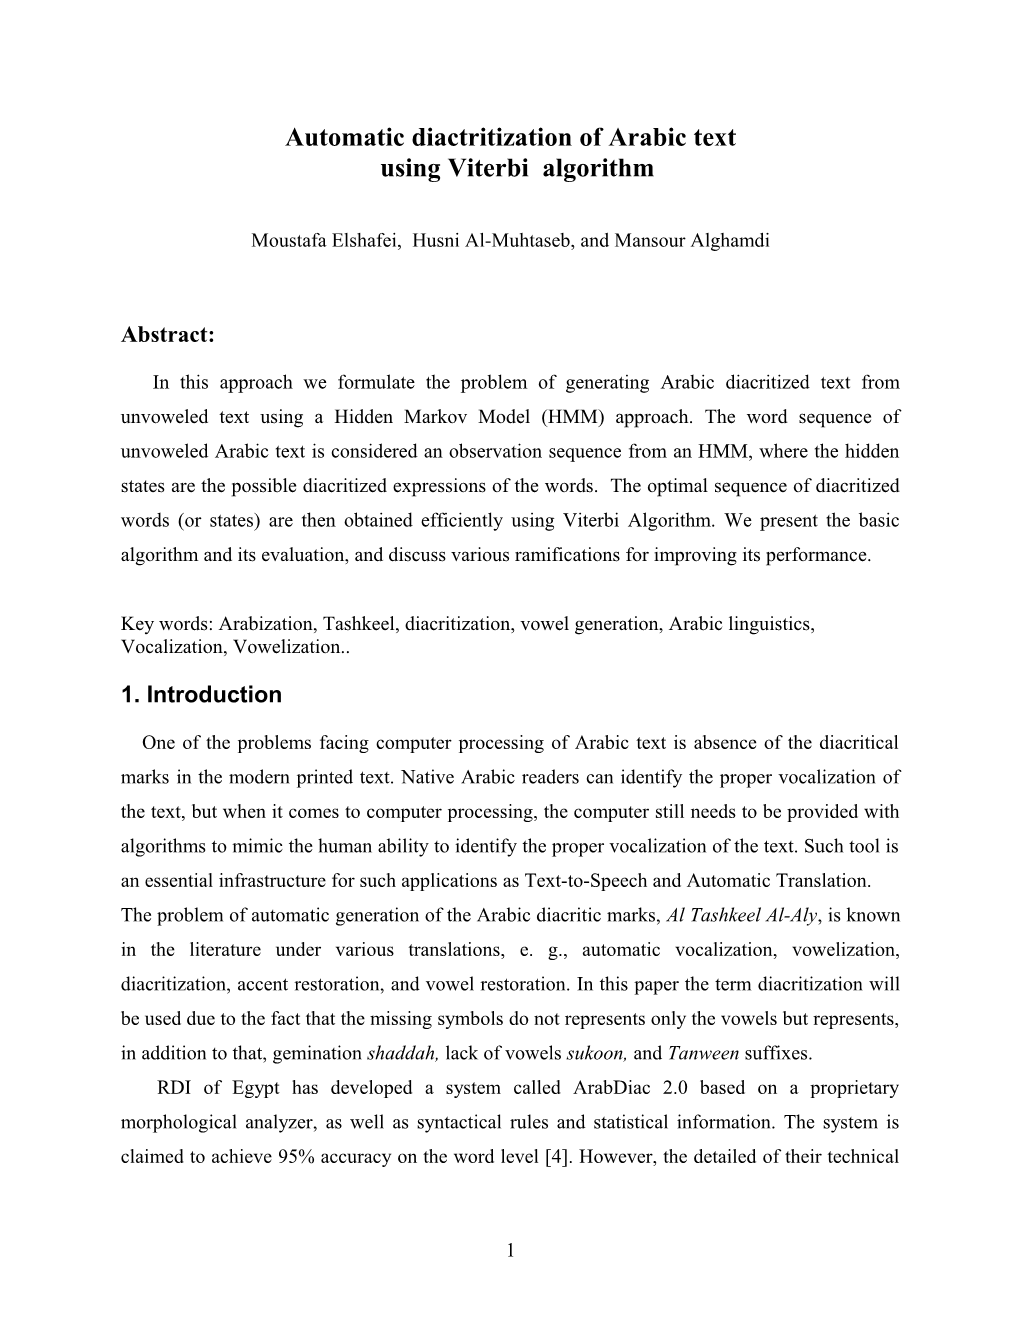 Automatic Diactritization of Arabic Text Using Viterbi Algorithm